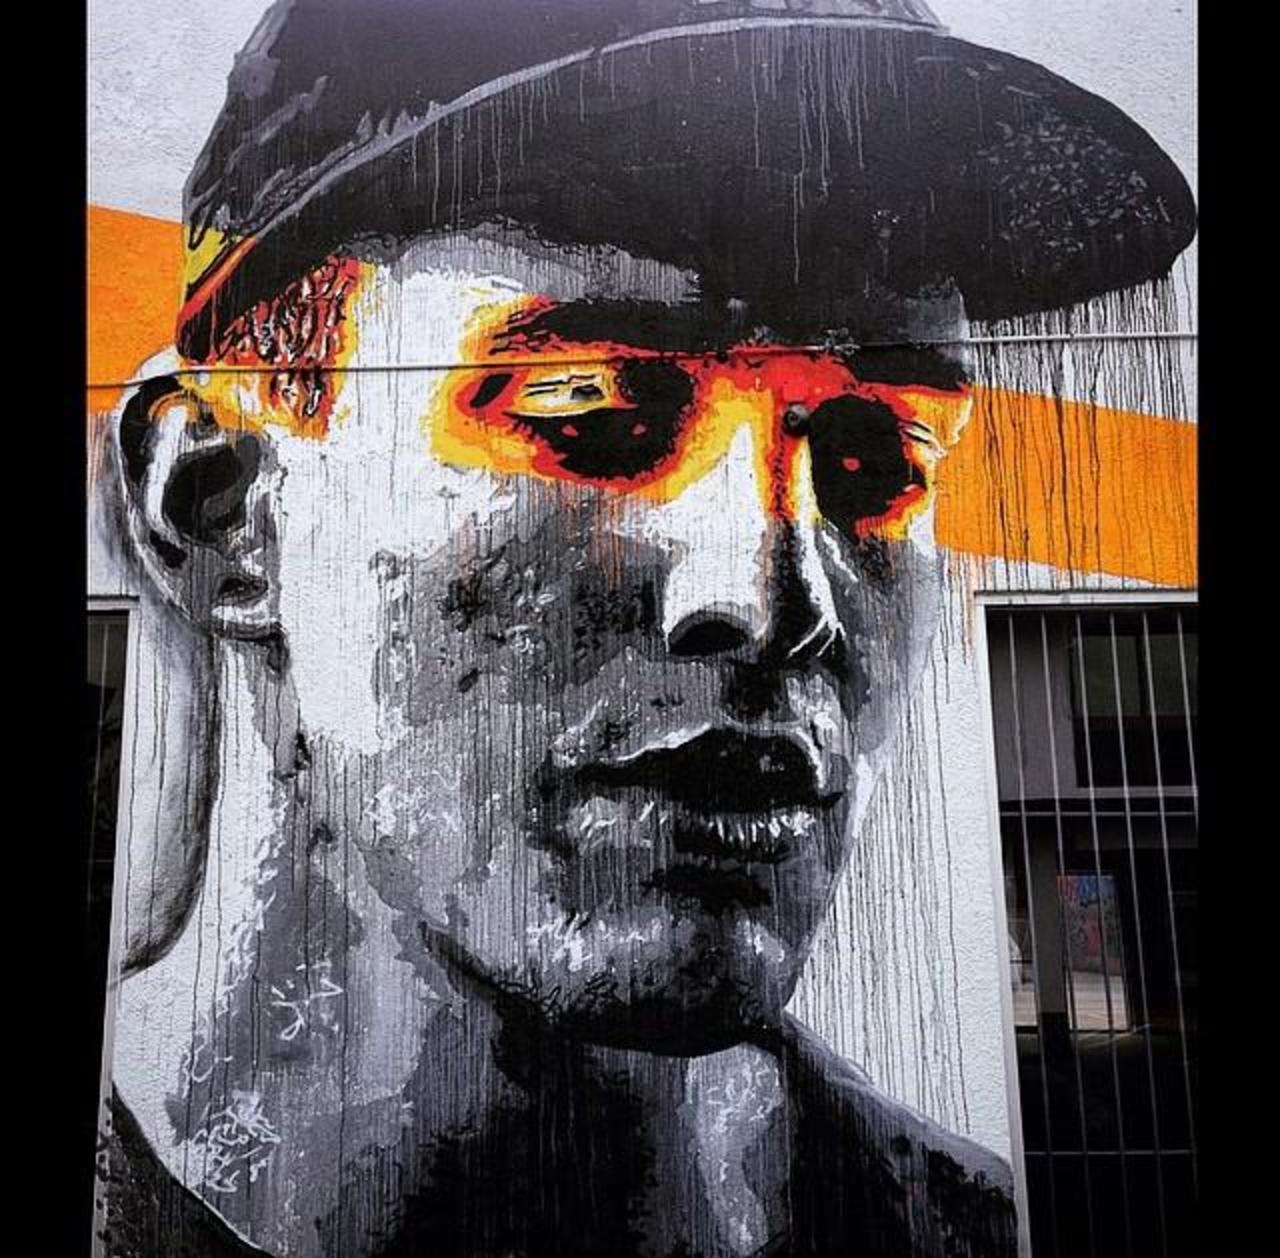 RT @GoogleStreetArt: Artist Nils Westergard Street Art portrait in Miami 

#art #graffiti #mural #streetart http://t.co/wdHjIxVaSJ"